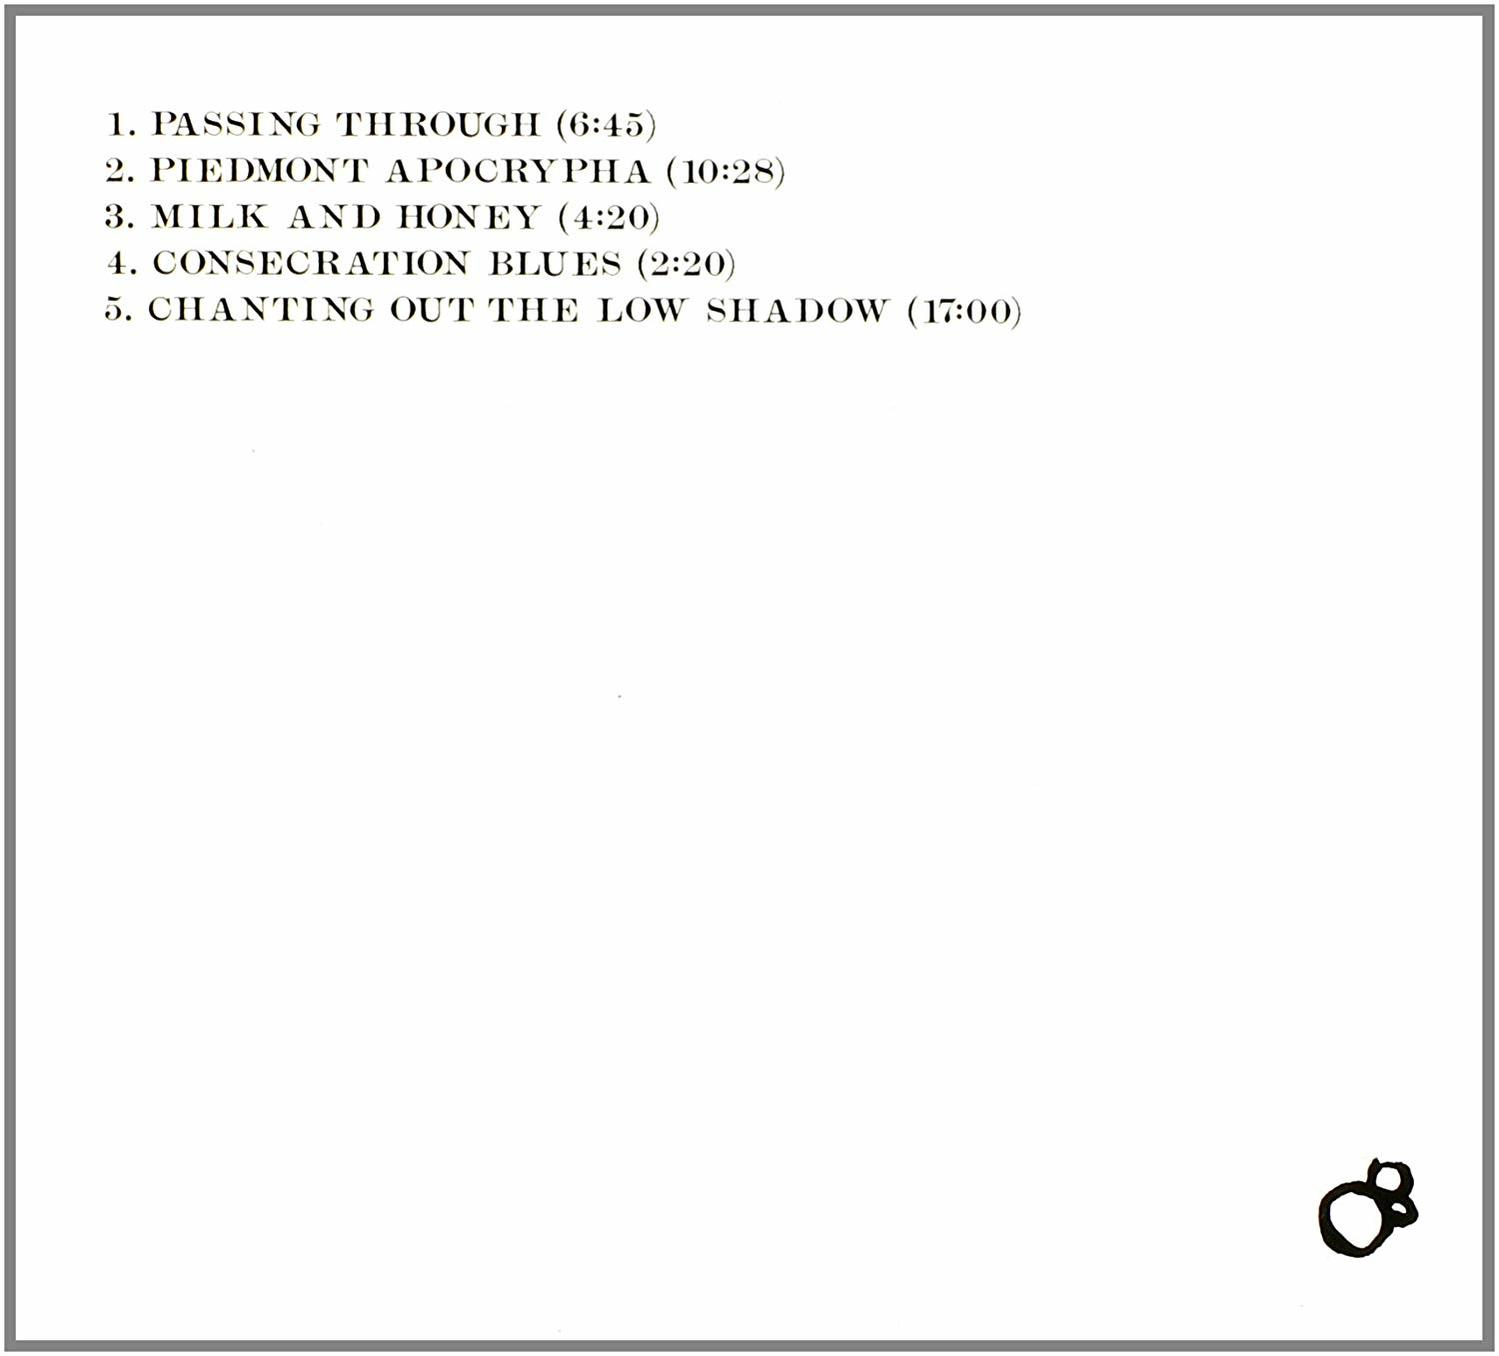 (CD) - - Piedmont Horseback Apocrypha